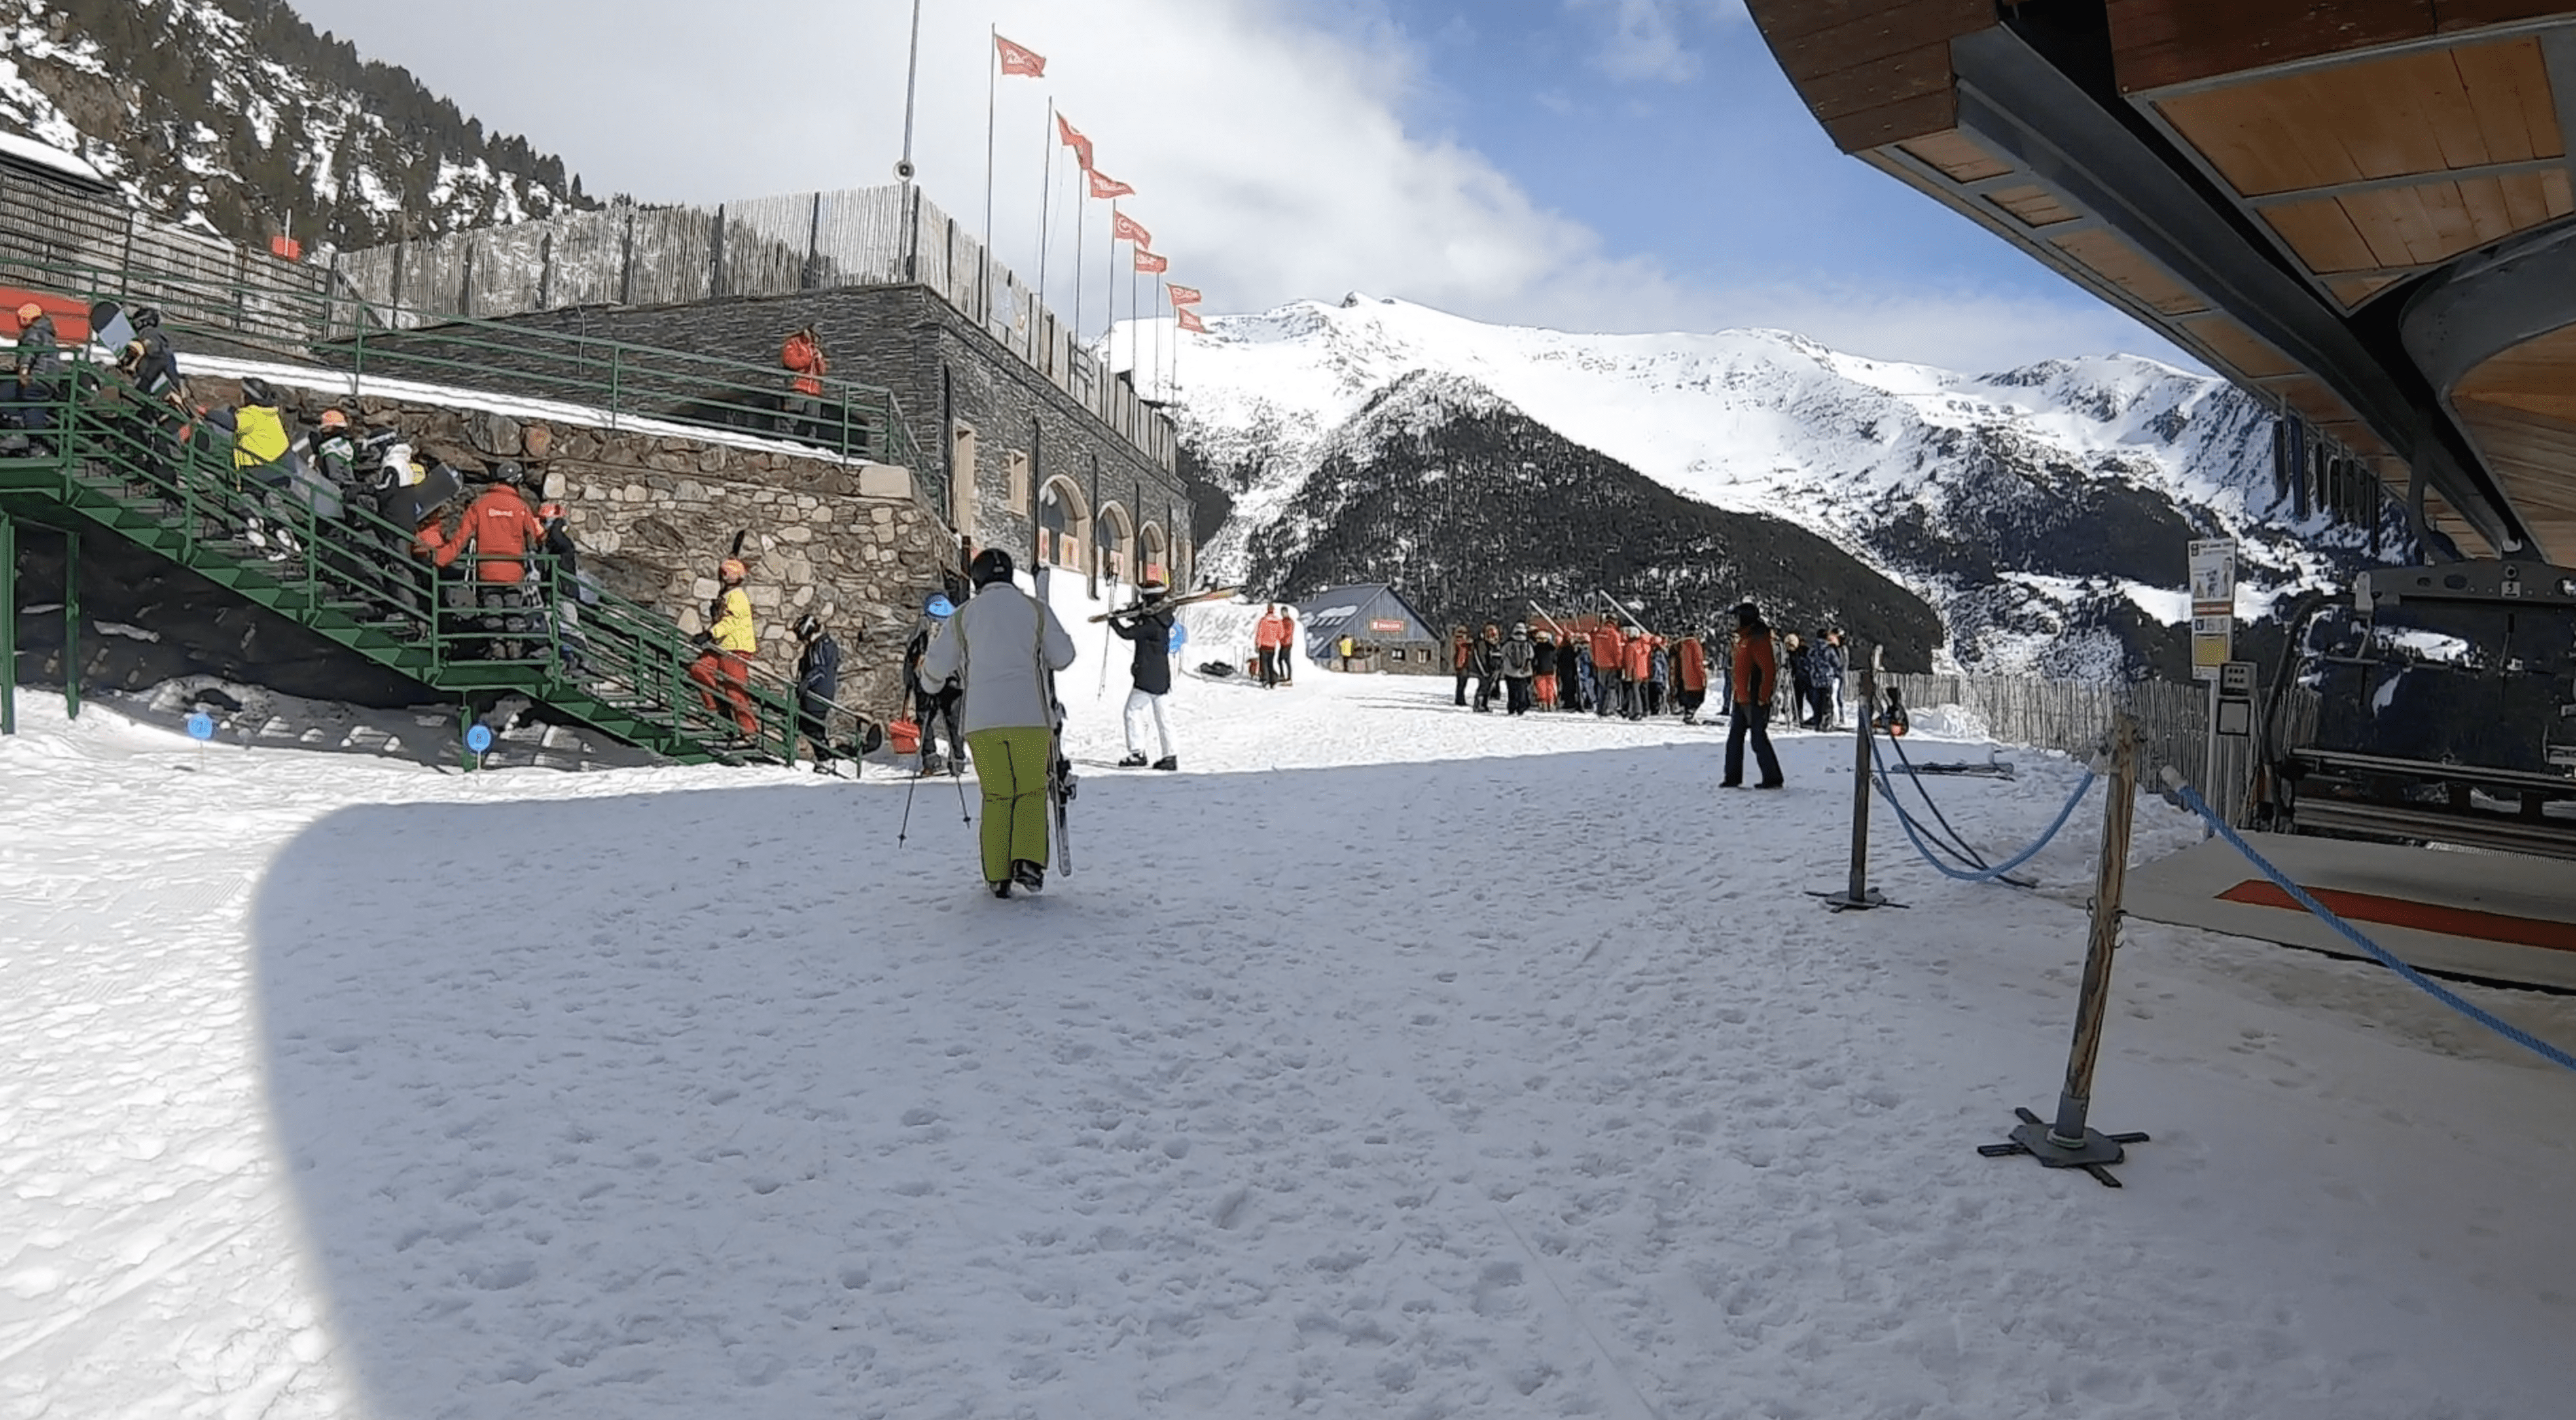 Arinsal Ski School Meeting Point